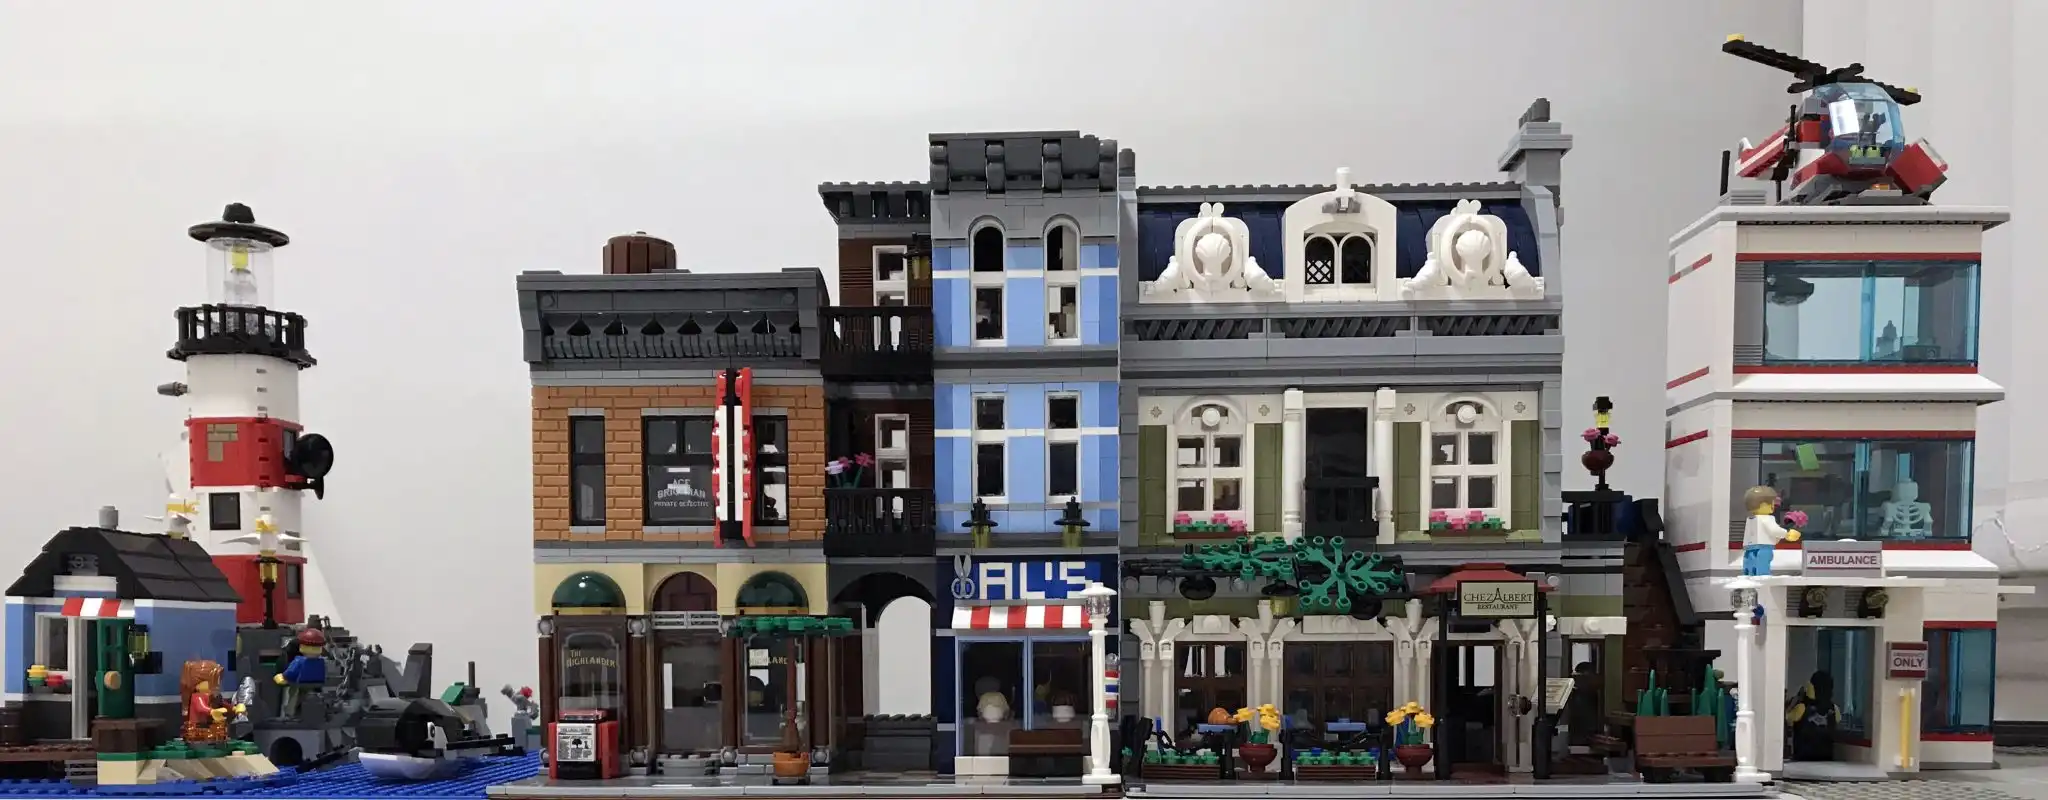 Studsburg Custom LEGO City Design